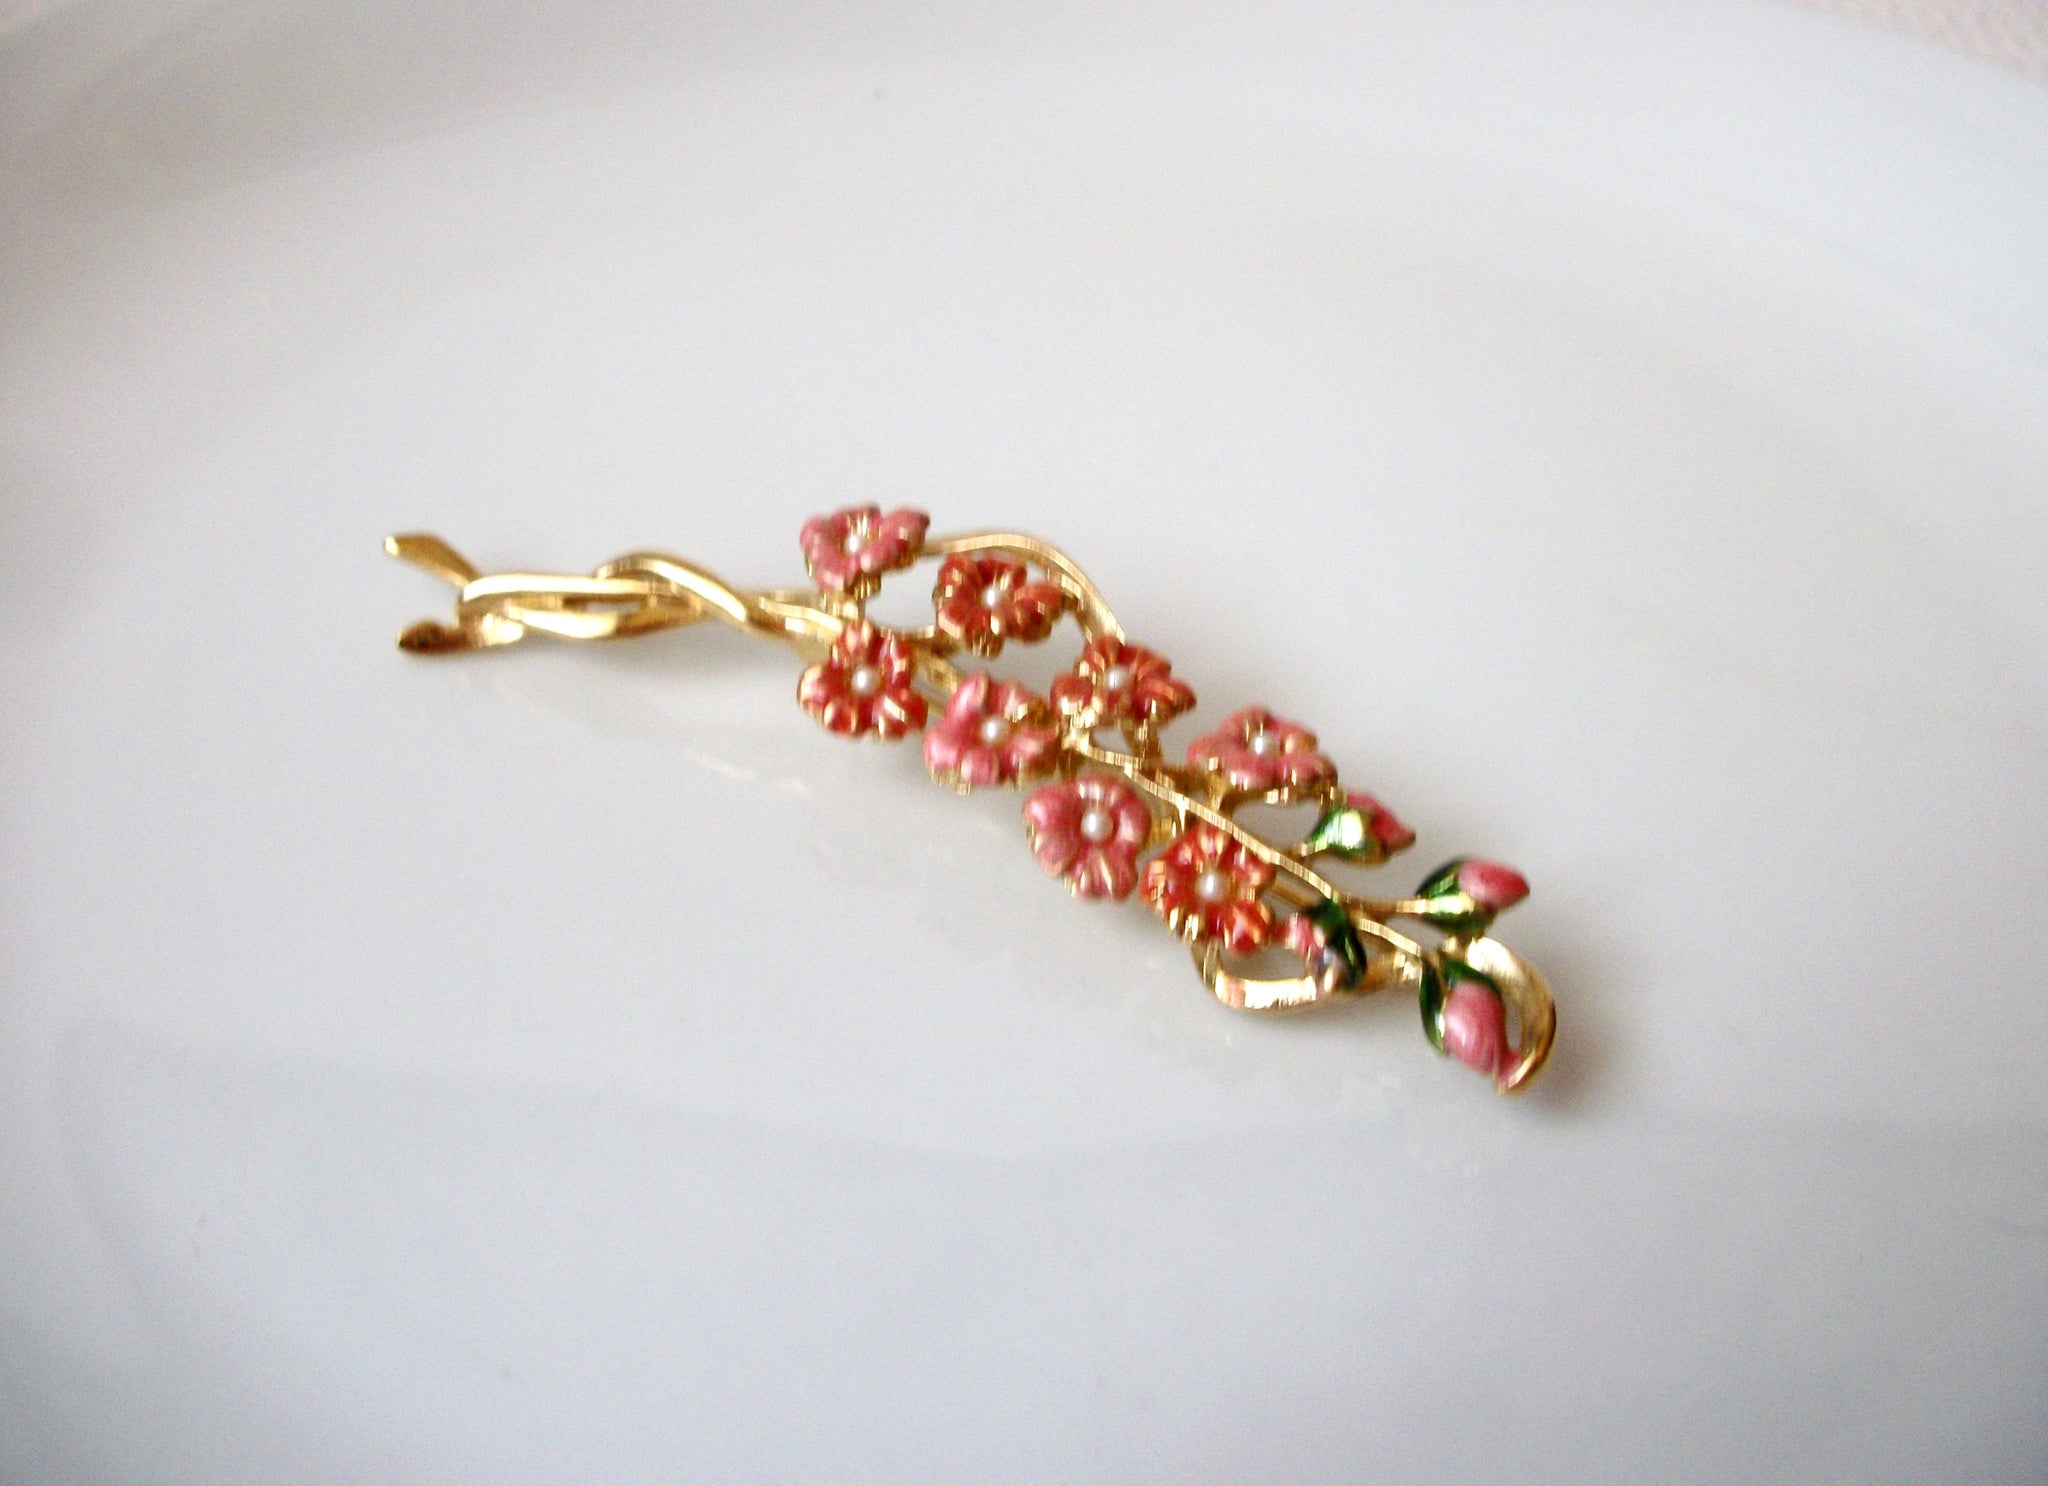 Vintage Enameled Floral Pin, Flower Brooch 113016